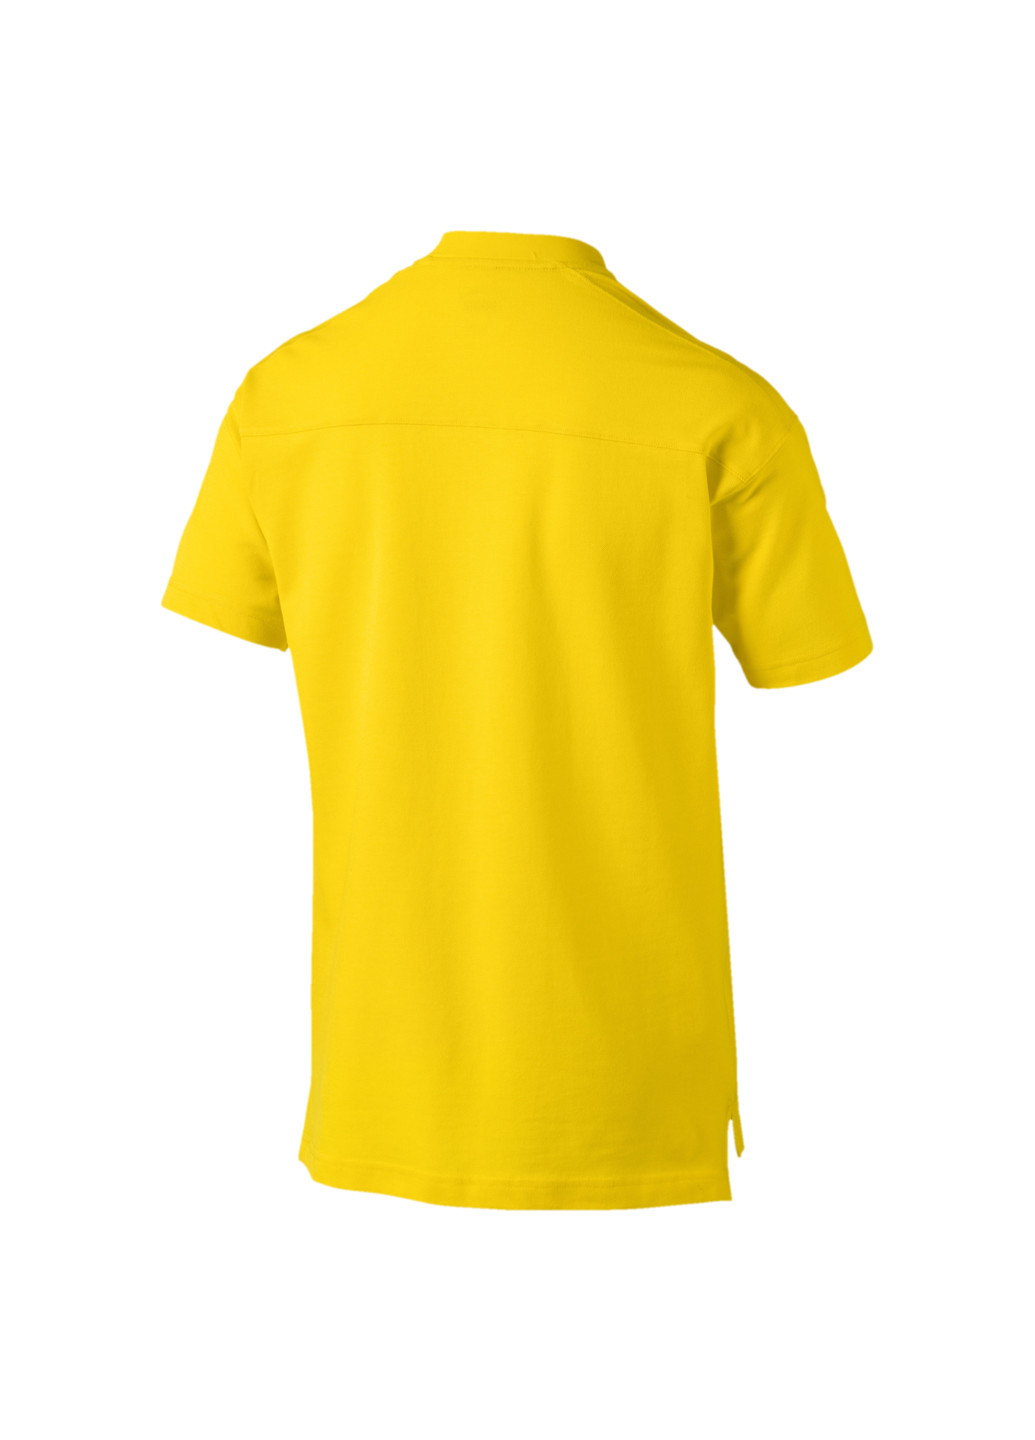 Желтая футболка-поло для мужчин Puma однотонная